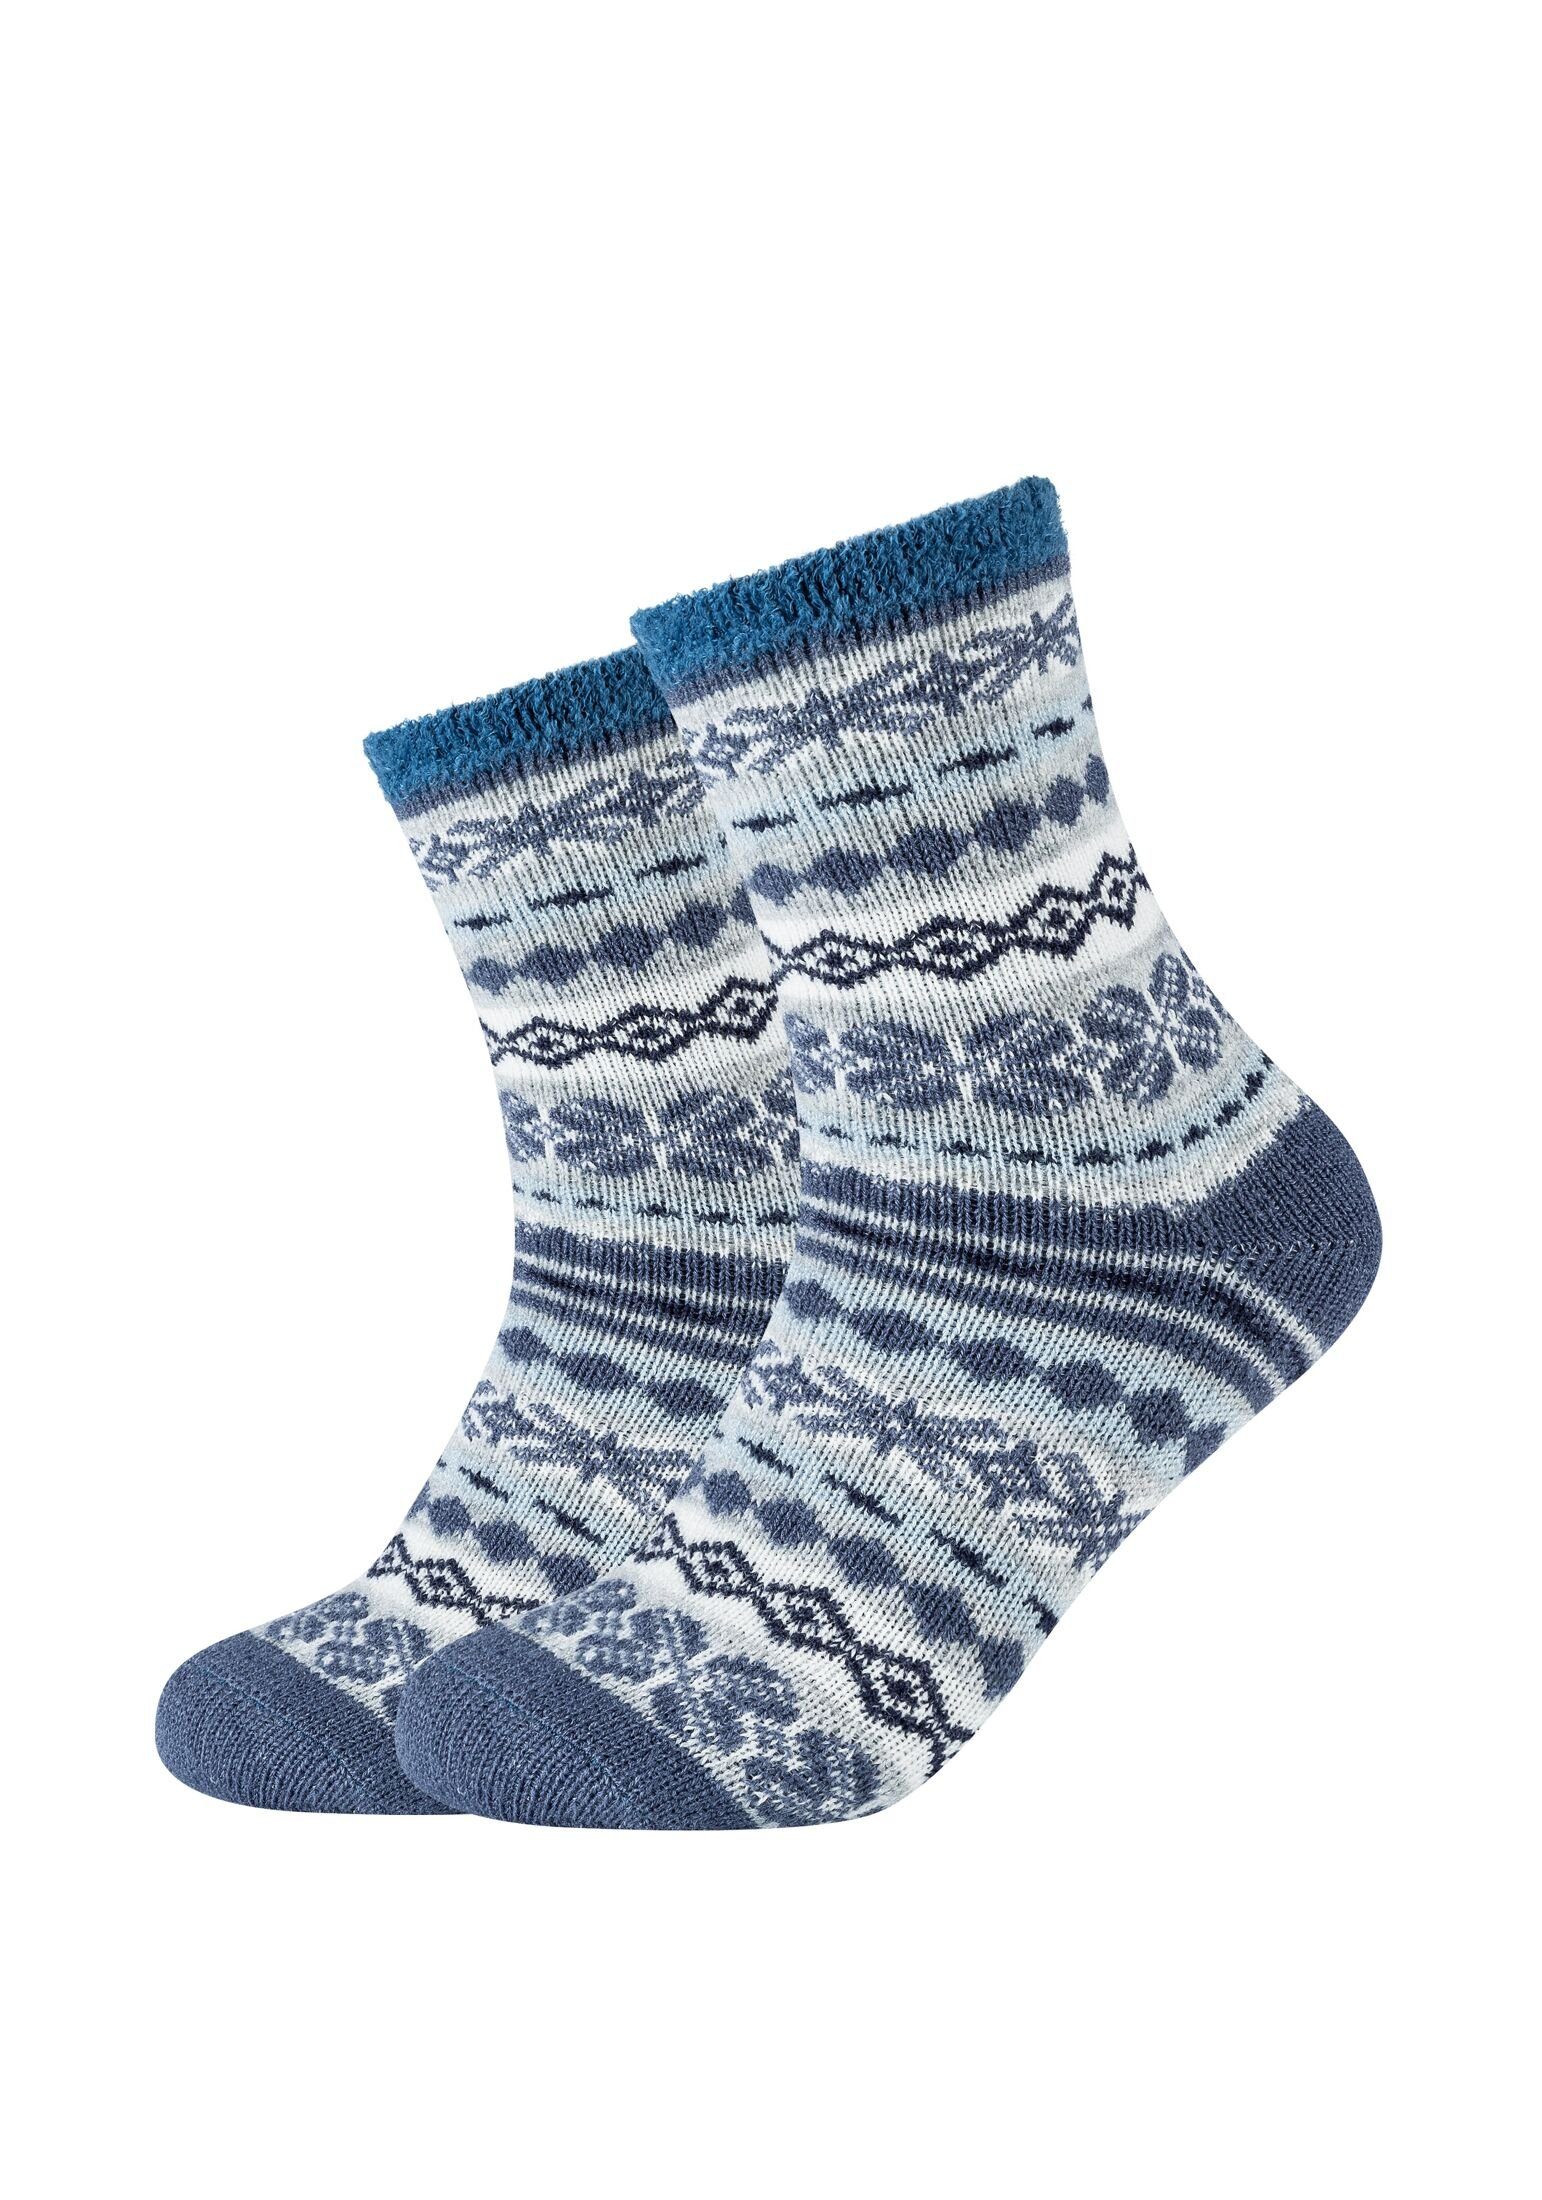 captain's Warm Kuschelsocken Norweger Damen Flauschig Cosy Socken Socken Camano blue